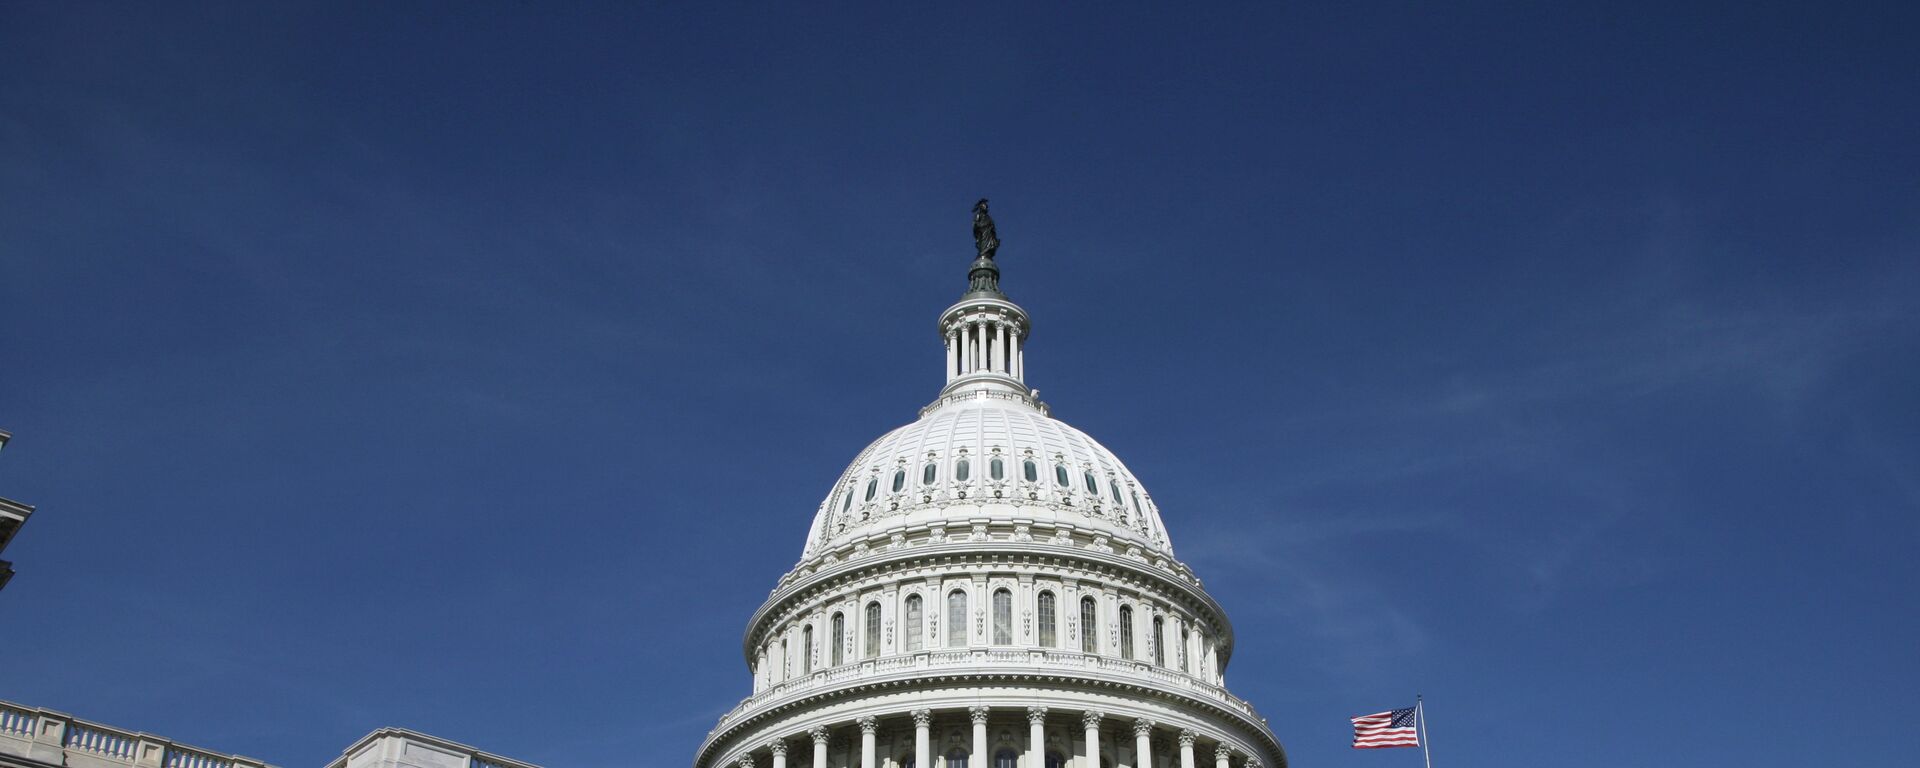 Капитолий (United States Capitol) на Капитолийском холме в Вашингтоне - Sputnik Таджикистан, 1920, 06.12.2021